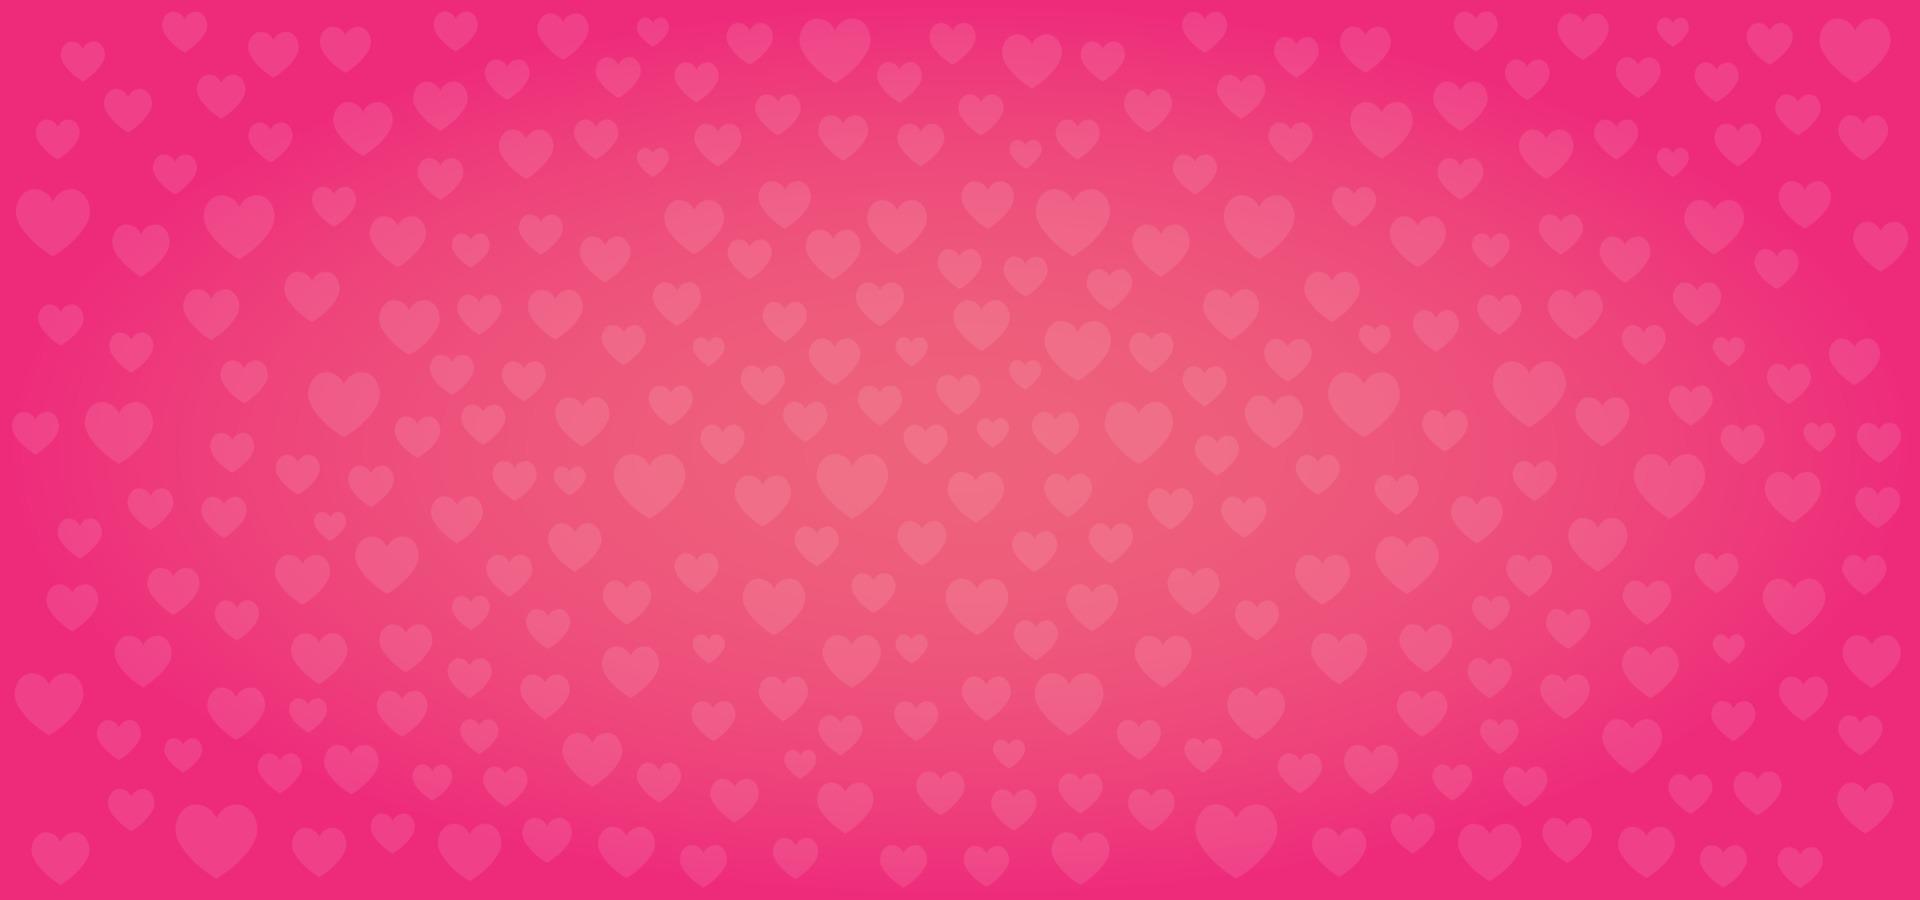 Beauty heart texture valentine background vector